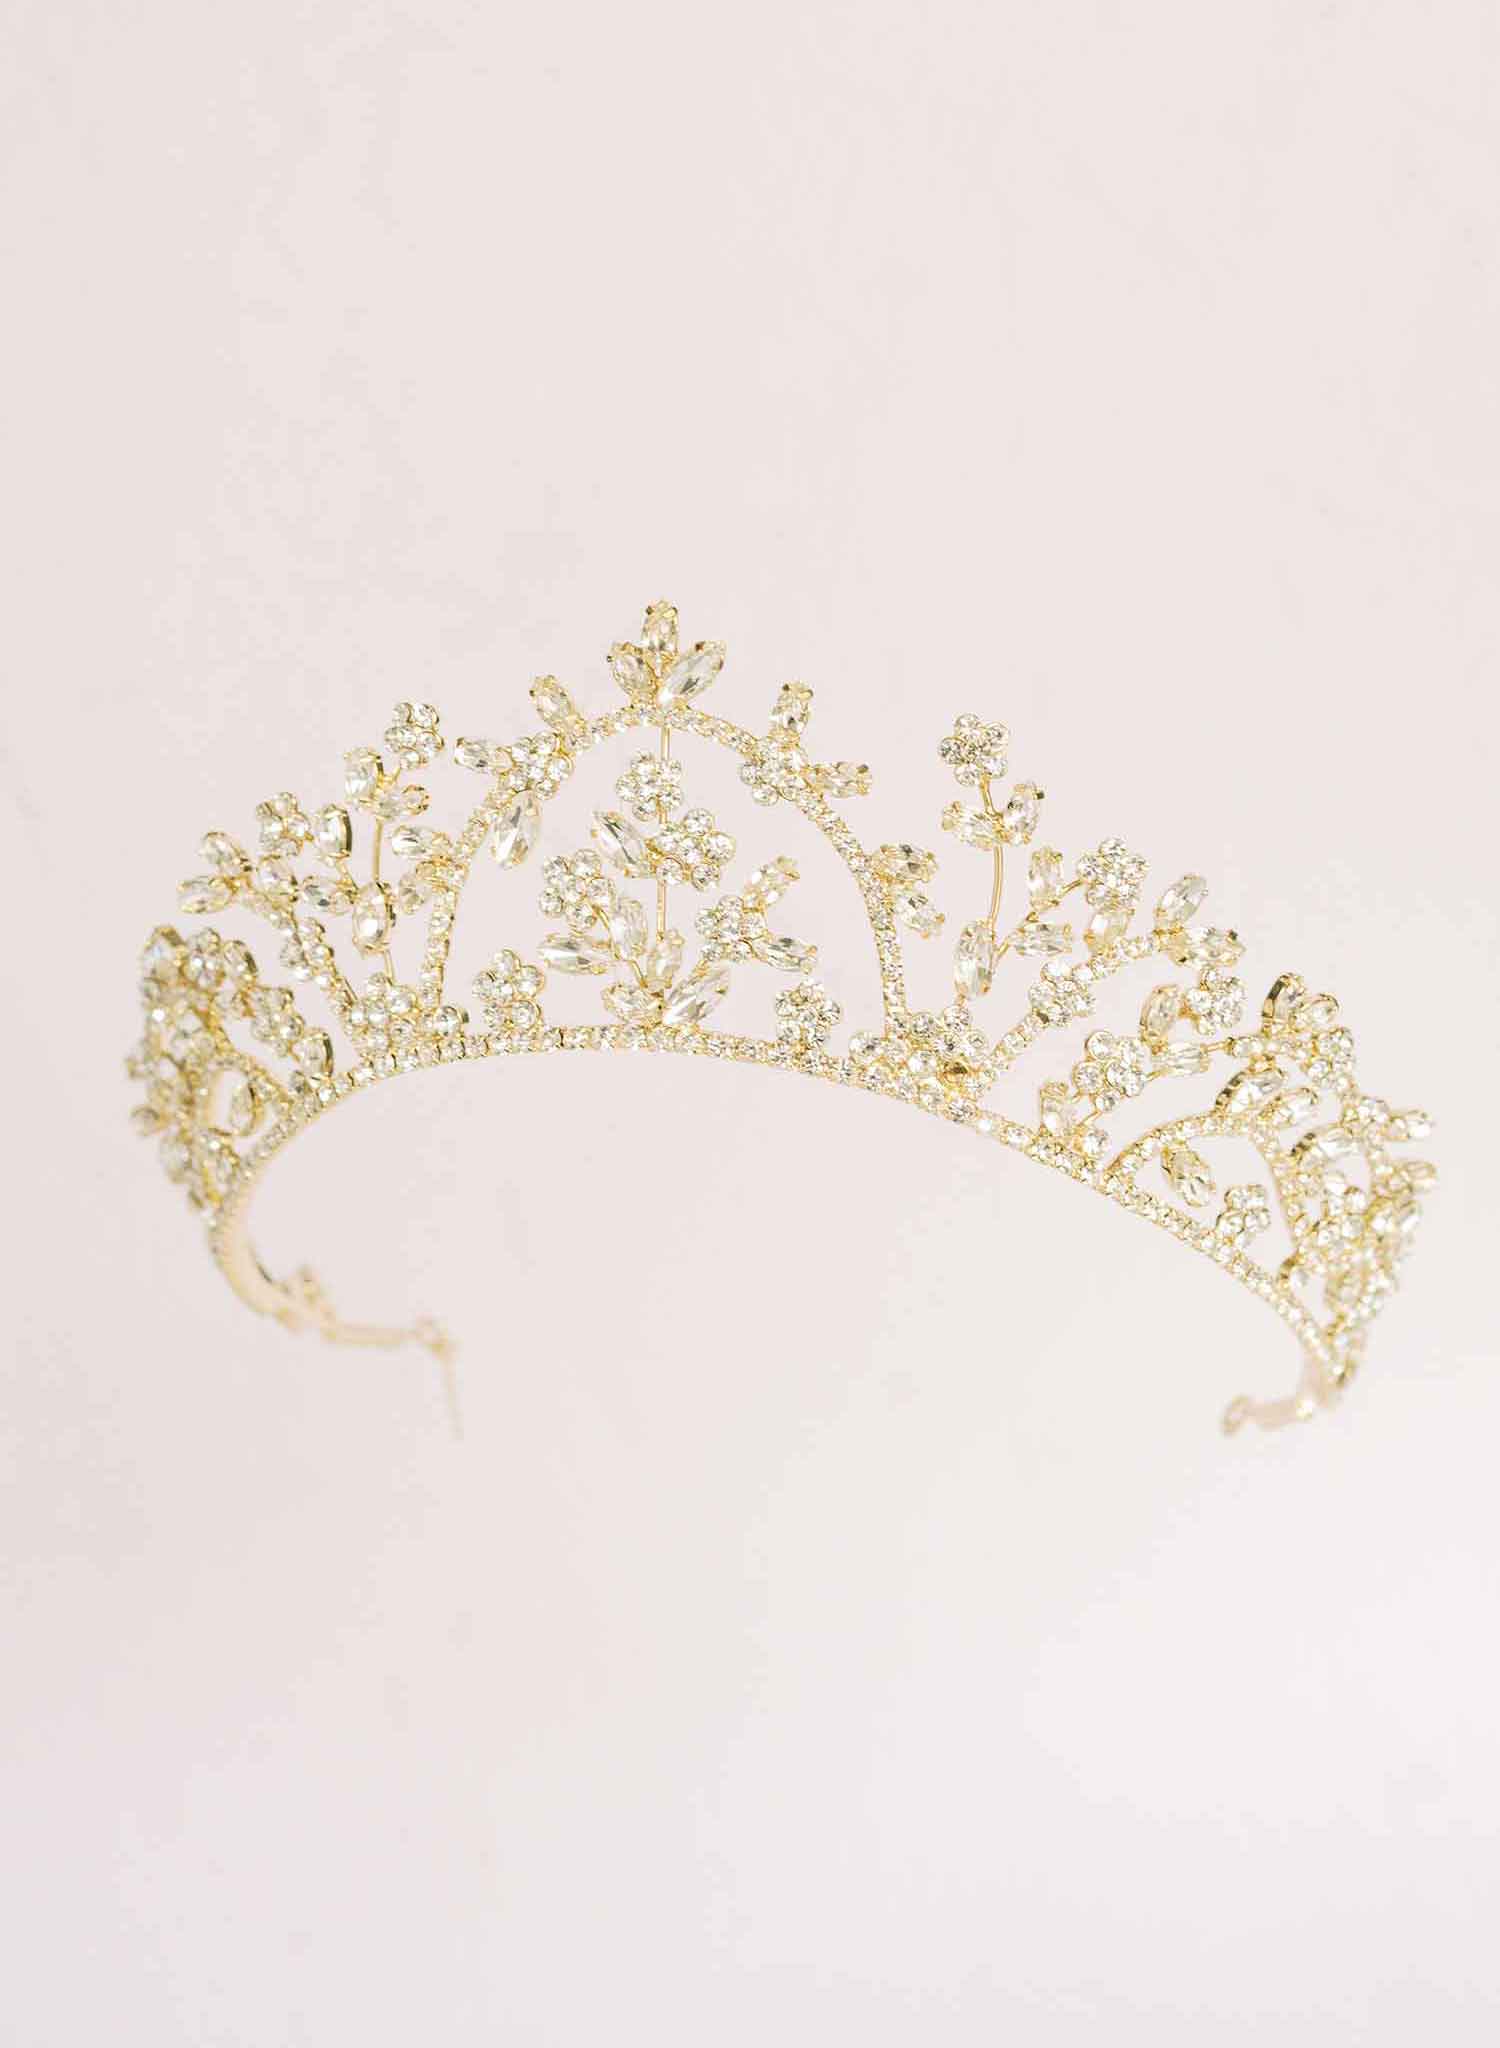 Bridal crystal crown, tiara - Majestic raised crystal tiara - Style | Twigs & ®, LLC